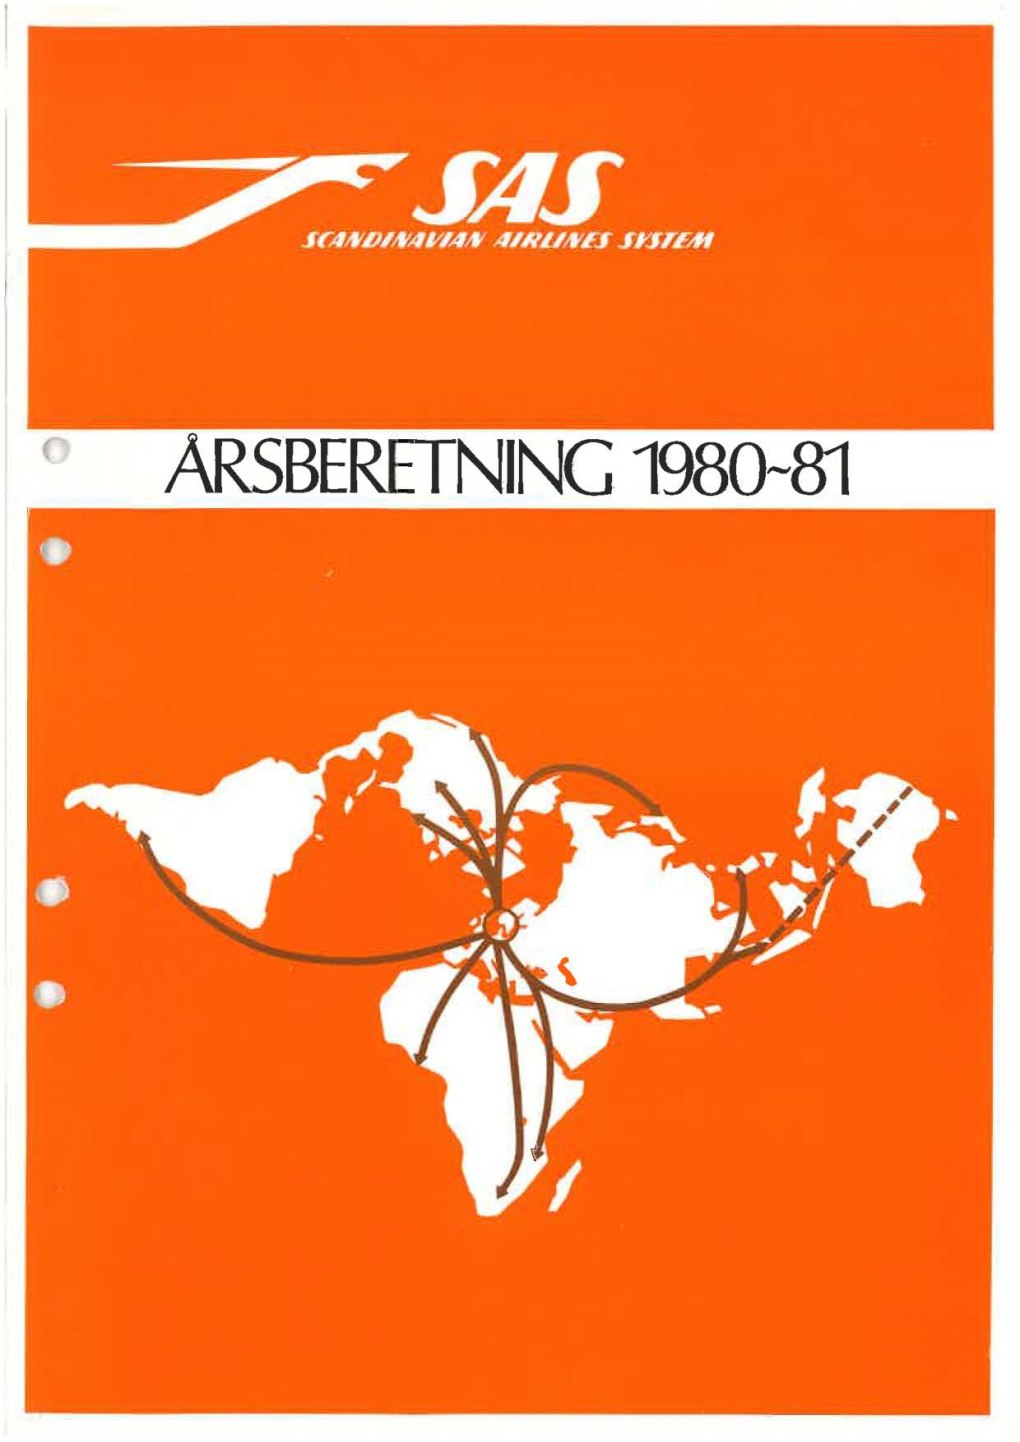 ARSBERETNING 1980-81 Srajiidinai/IA/1' AIRUNES Sr.I'teai Scandinavian Airlines System (SAS) Er Nationalt Luftfartselskab for Danmark, Norge Og Sverige